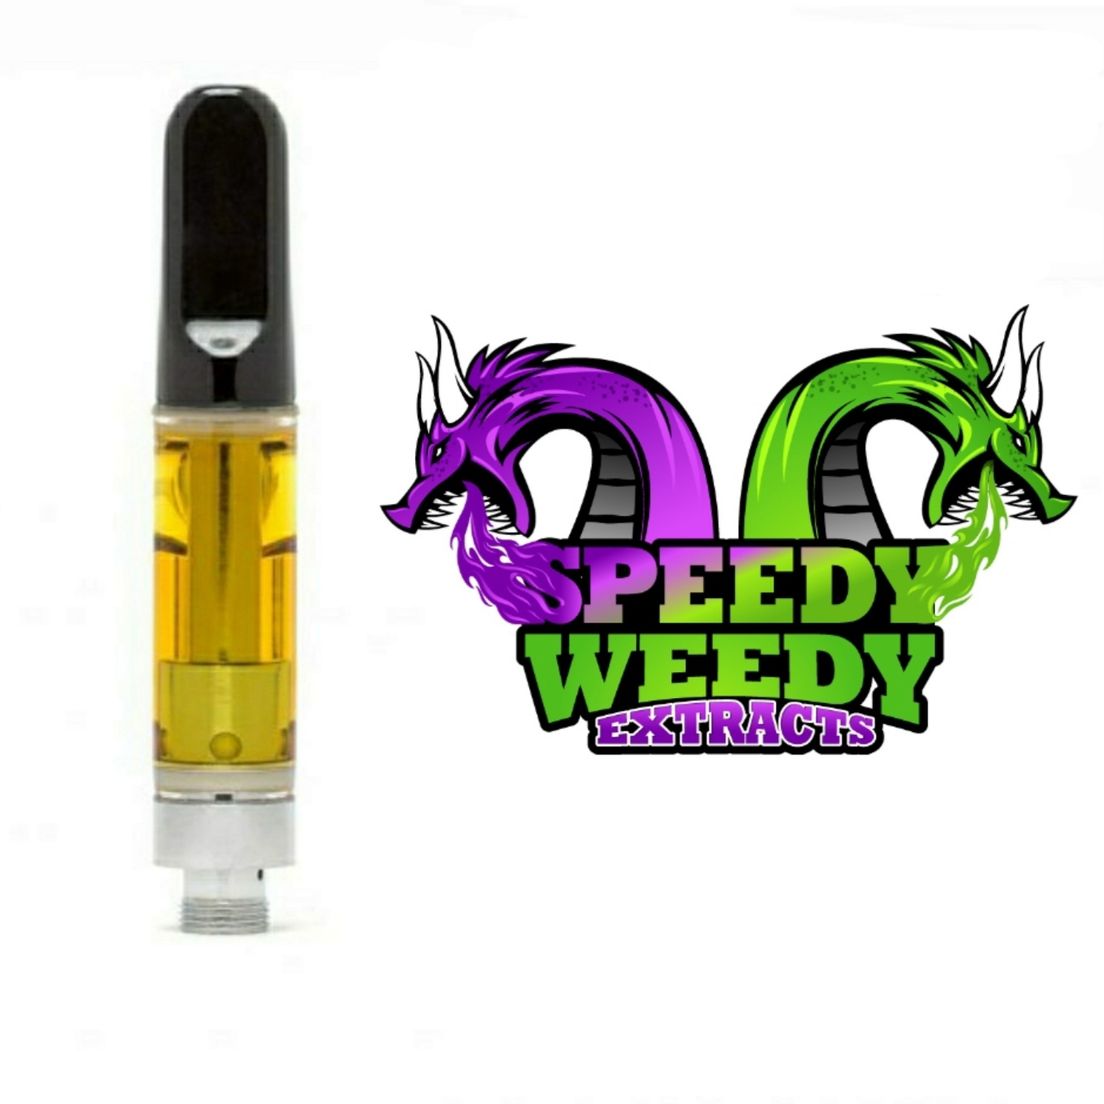 1. Speedy Weedy 1g THC Vape Cartridge - Pineapple (I) 3/$60